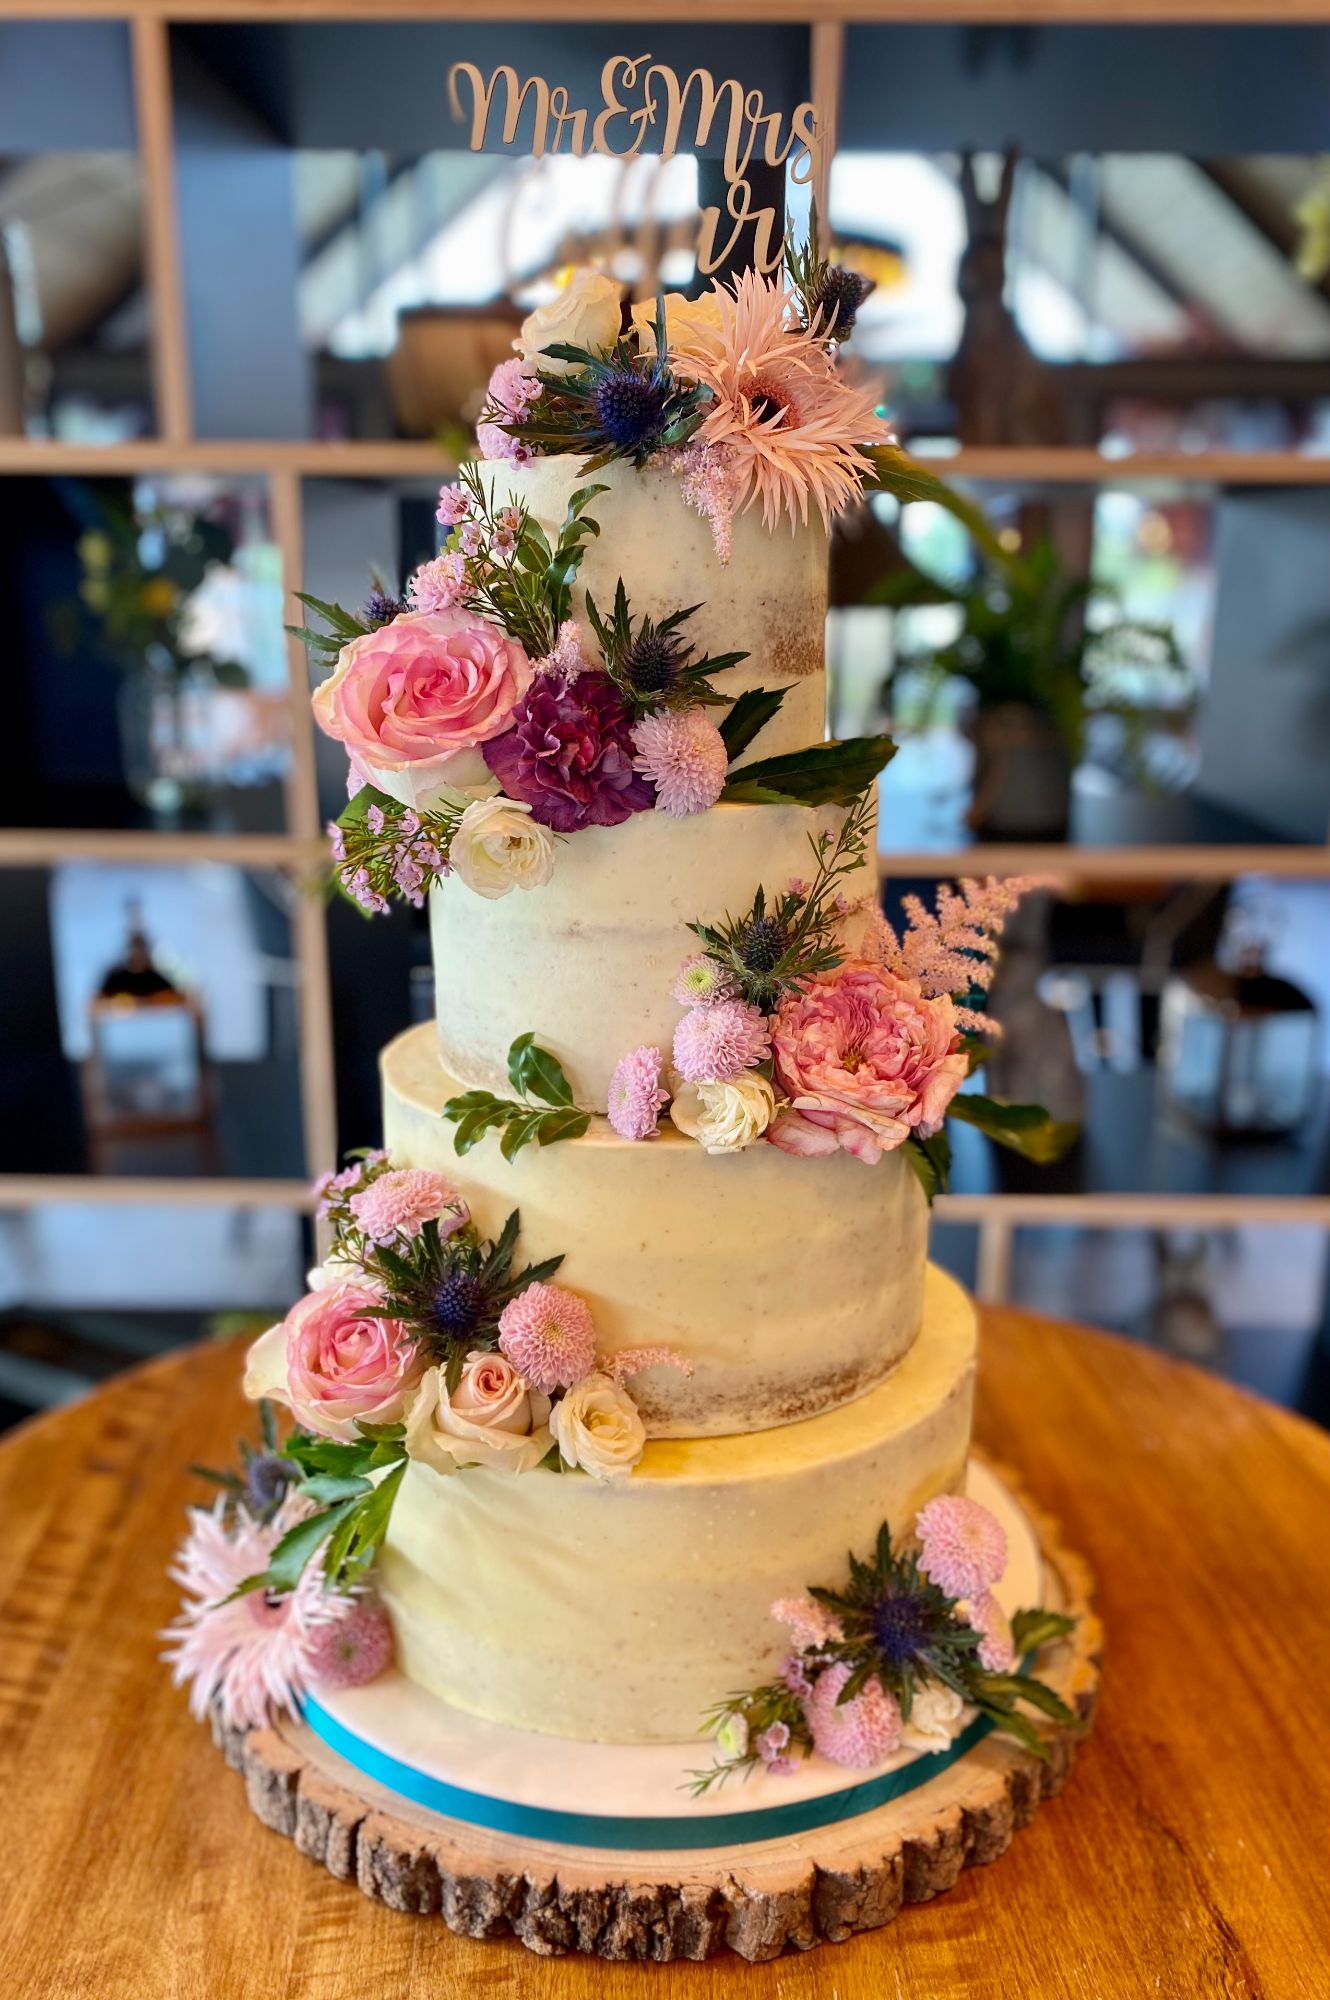 Helen Jane Cake Design, Christchurch, Dorset - wedding cakes (26)